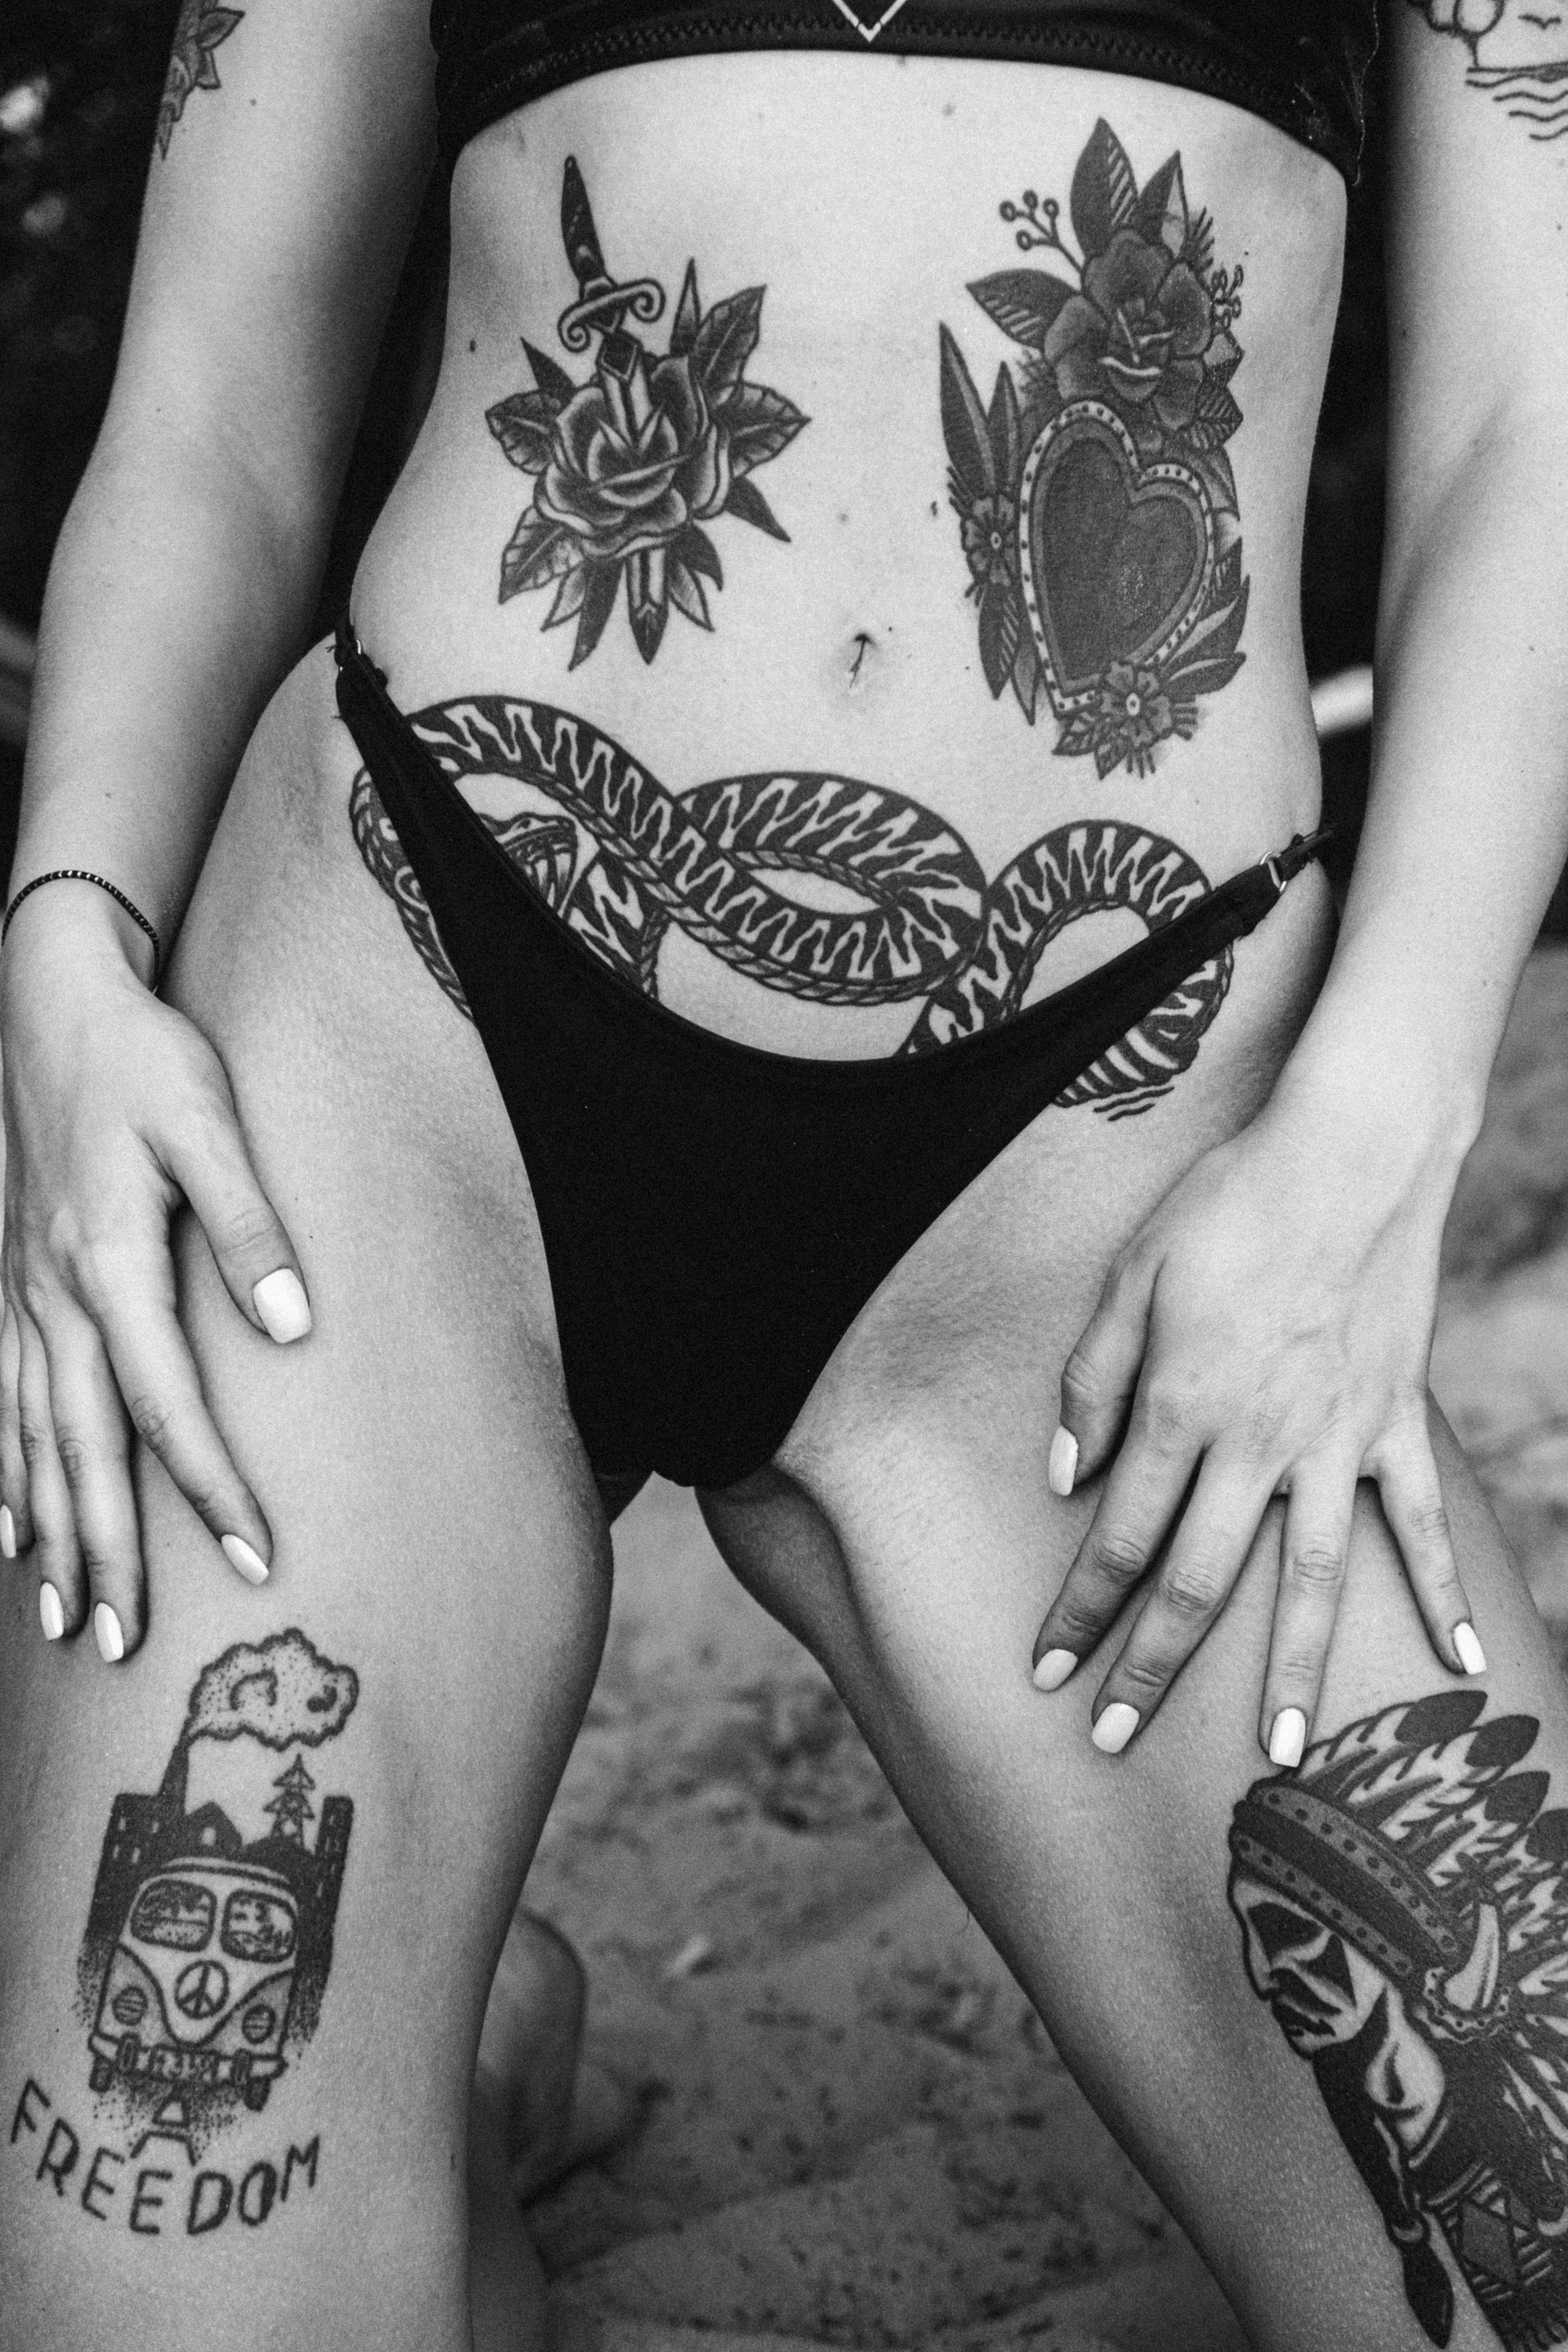 Una mujer mostrando sus tatuajes | Fuente: Unsplash